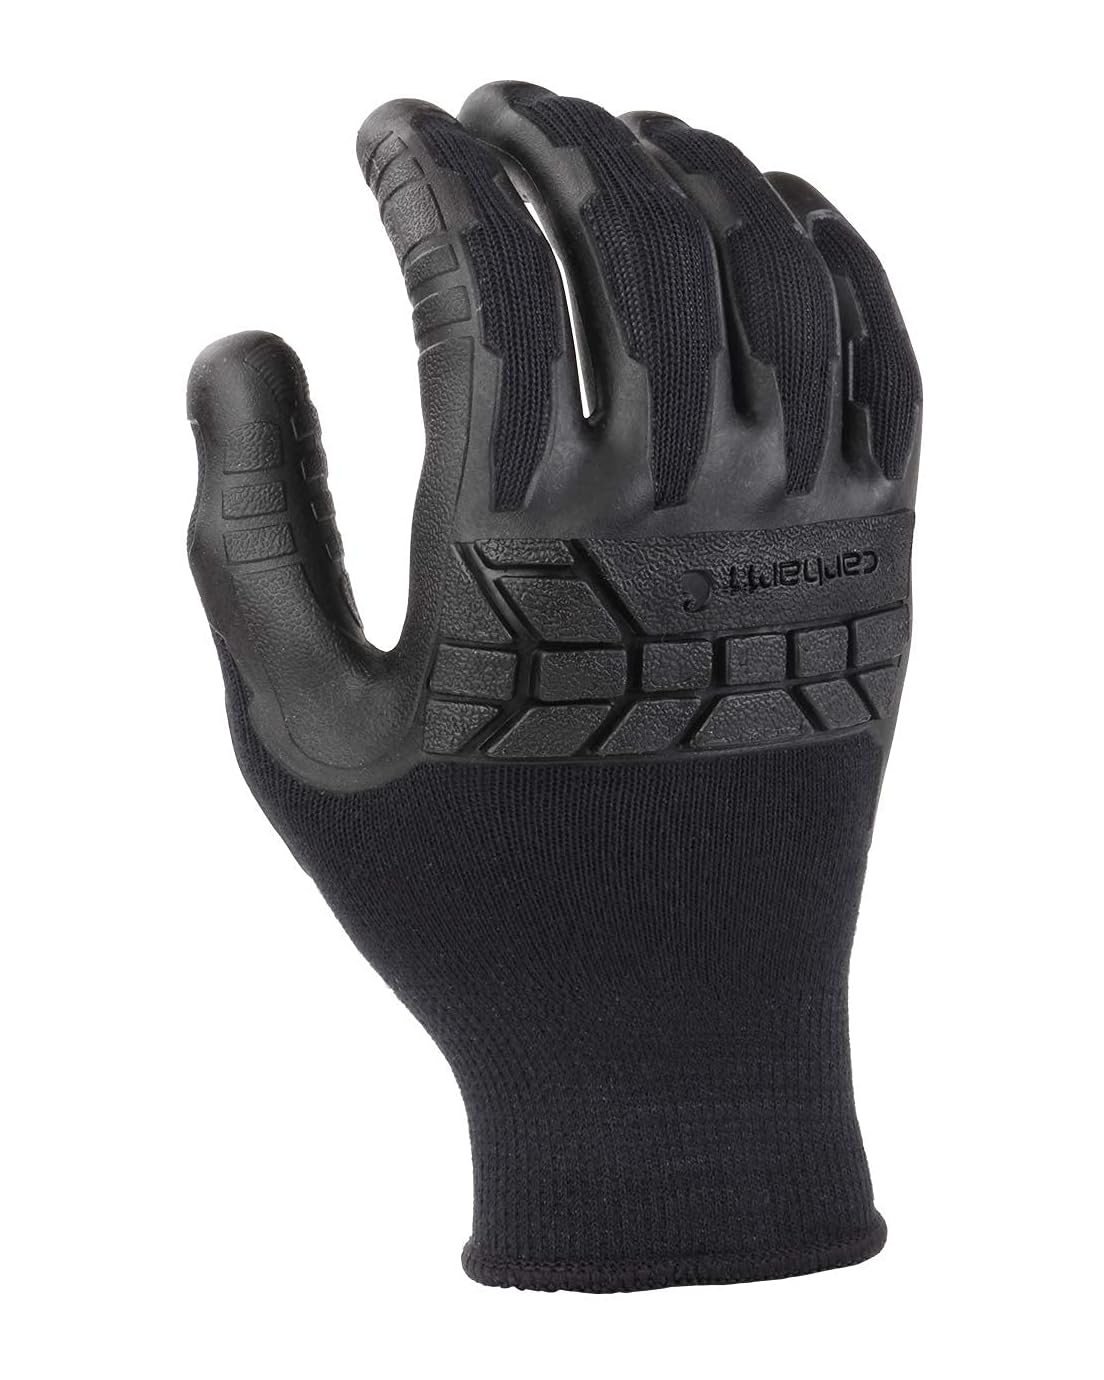 Carhartt Mens C-Grip Knuckler Glove